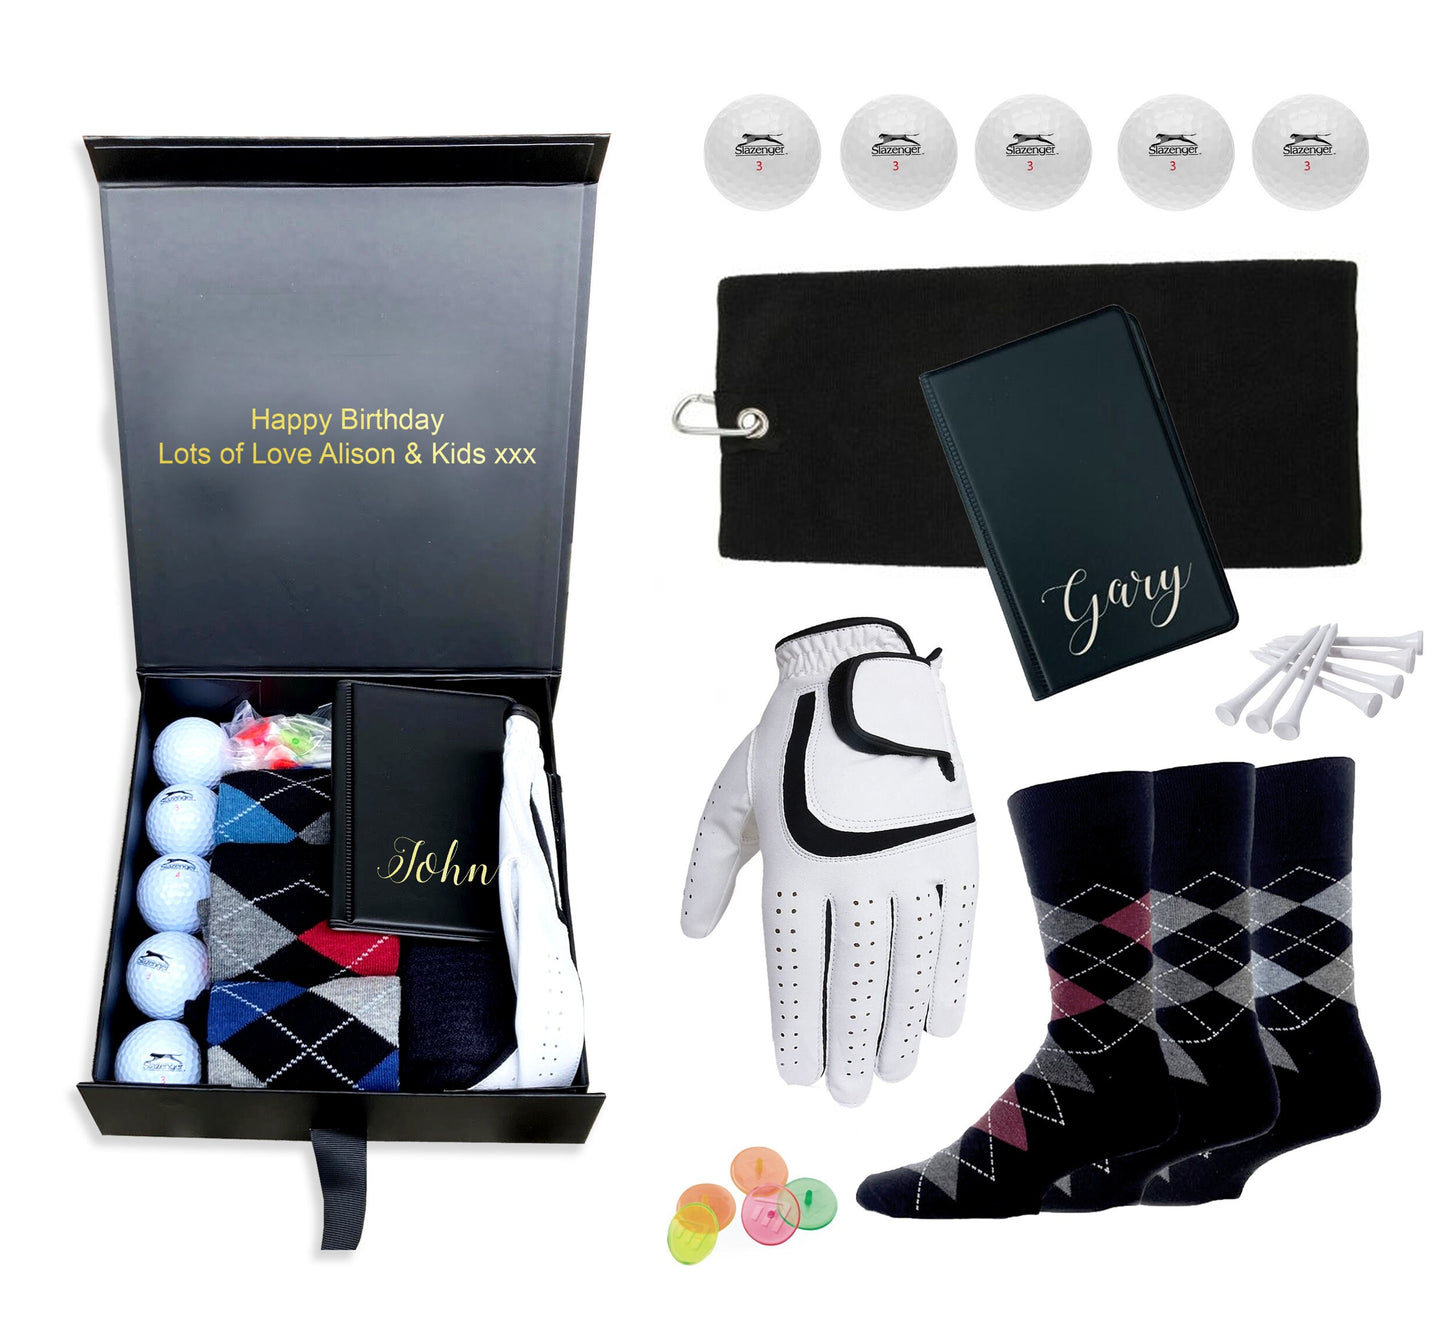 Personalised large black mangetic golf gift box filled socks, balls, towel, glove scorecard mens gift birthday